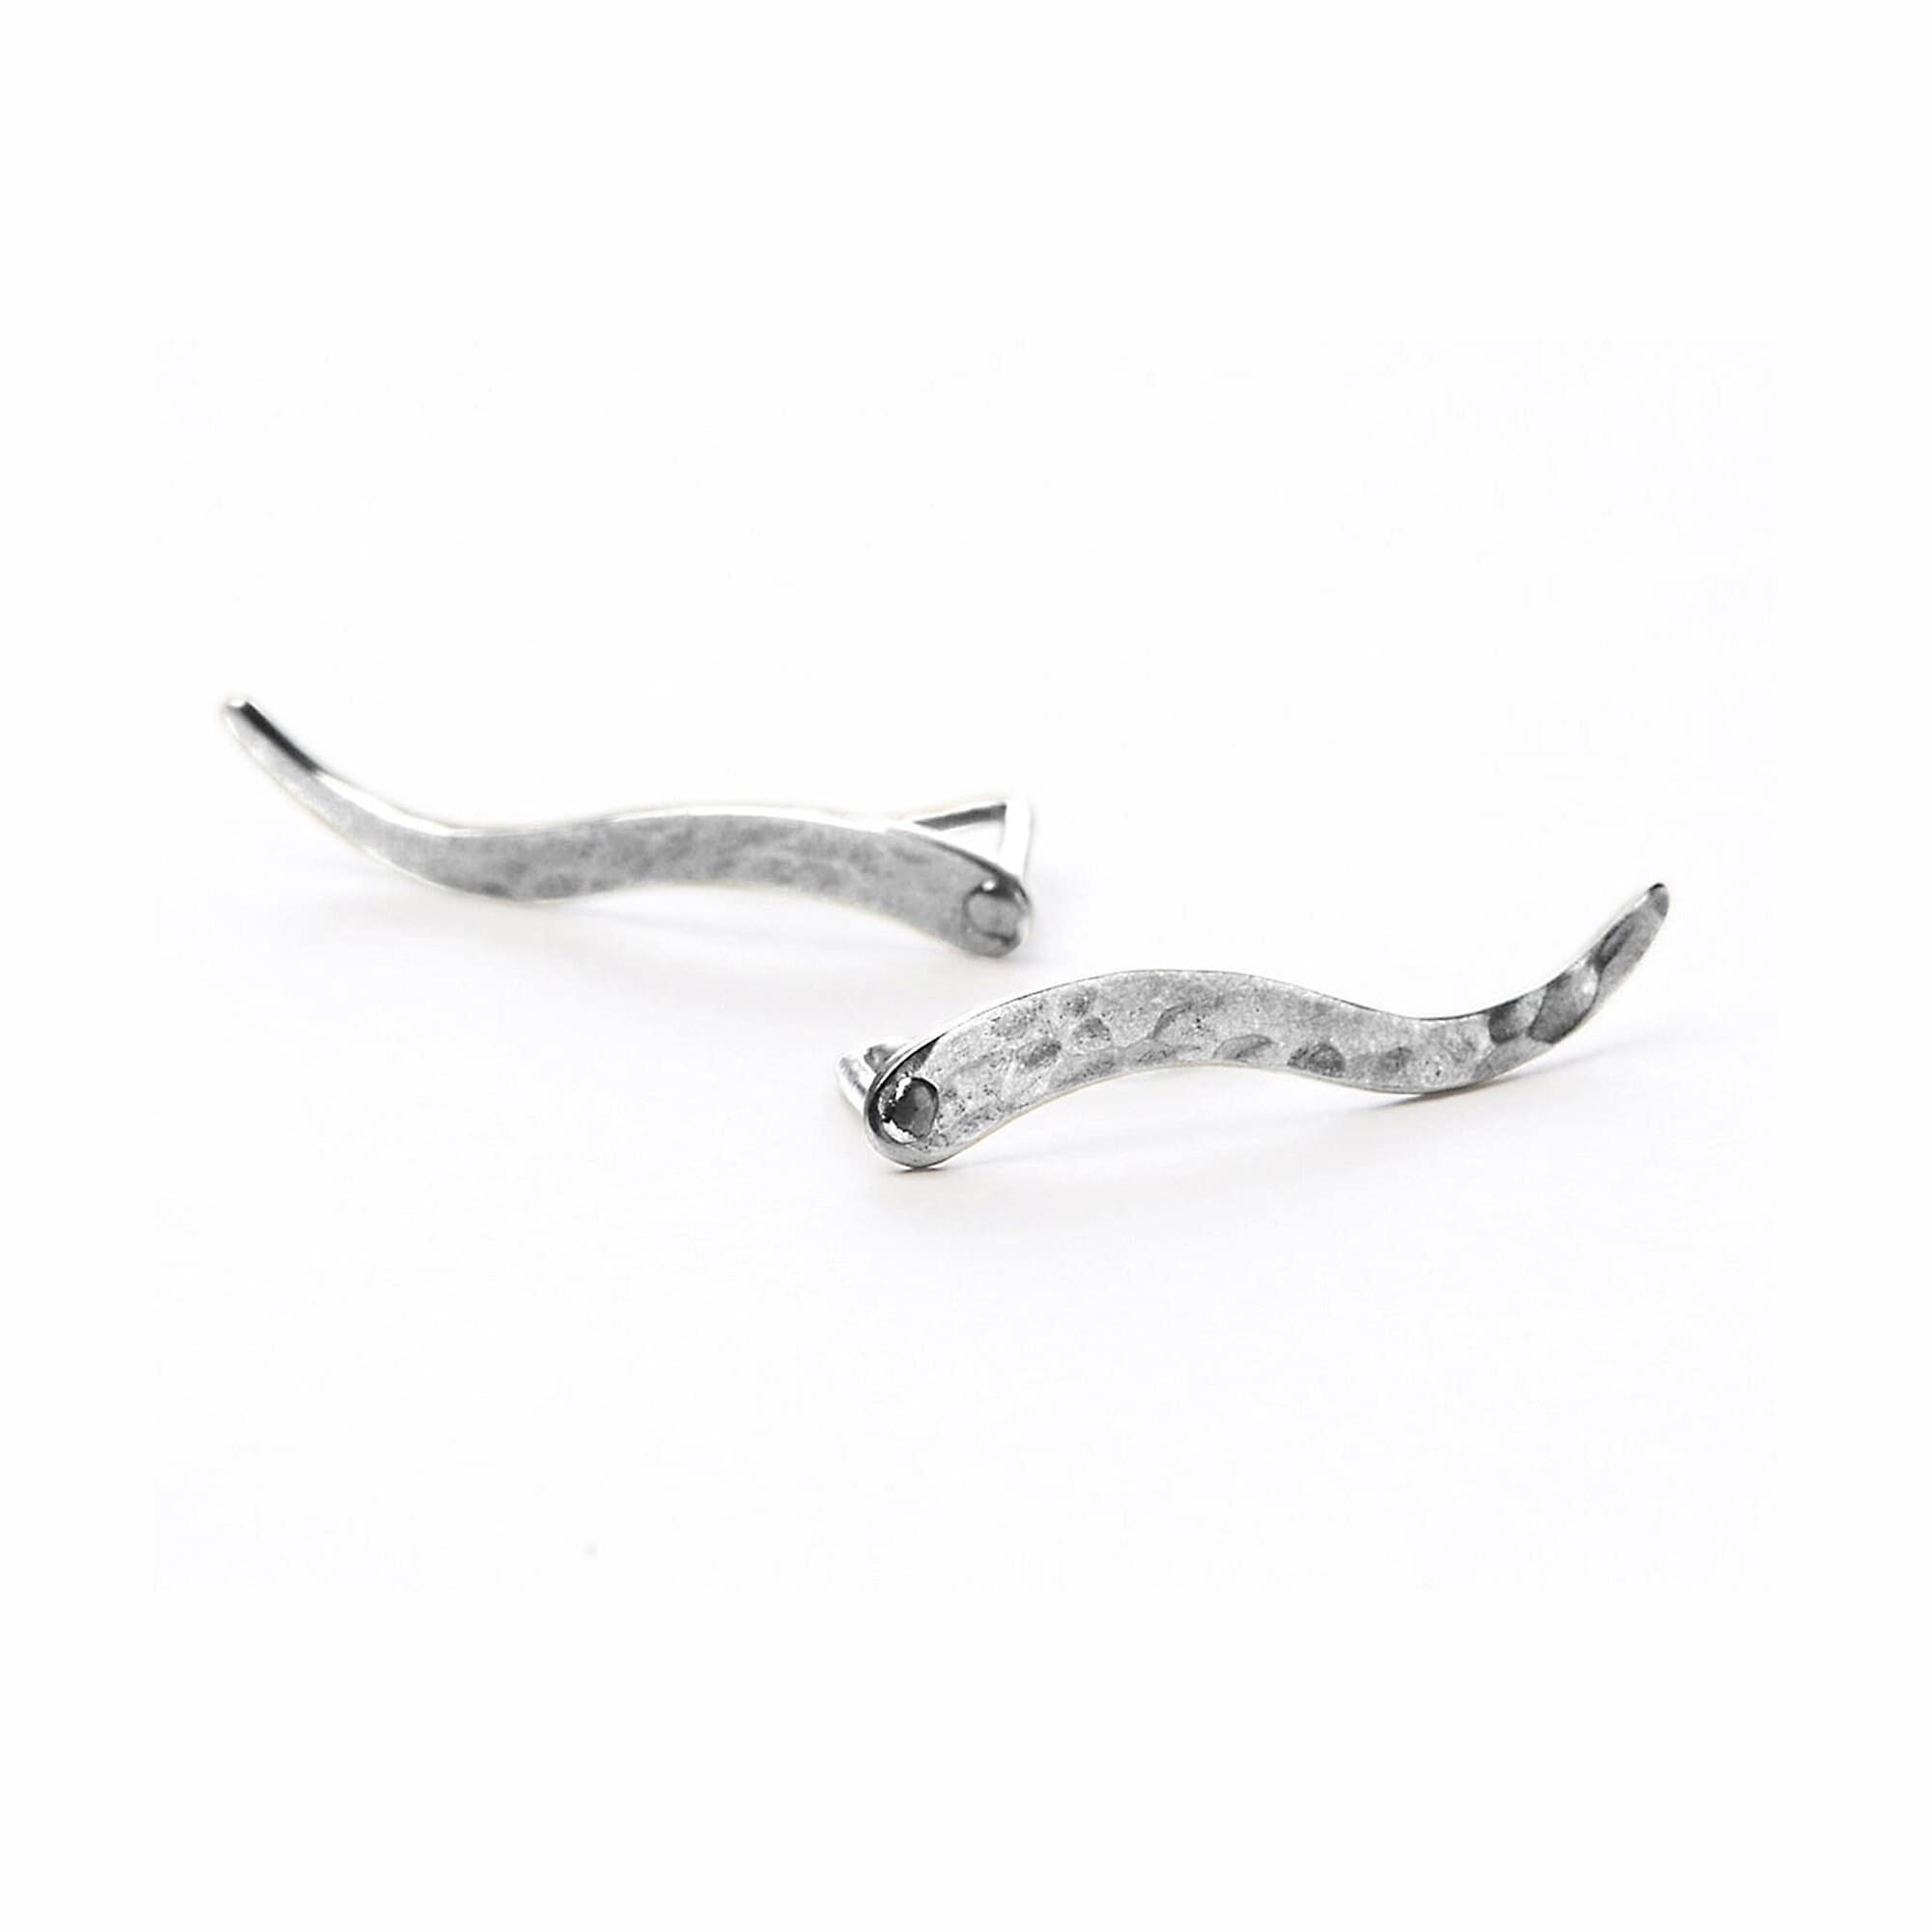 Luxury Earring Lifters Backs .925 Sterling Silver Large Earrings, Magic Ear  Lifts Support for Droopy Ears 